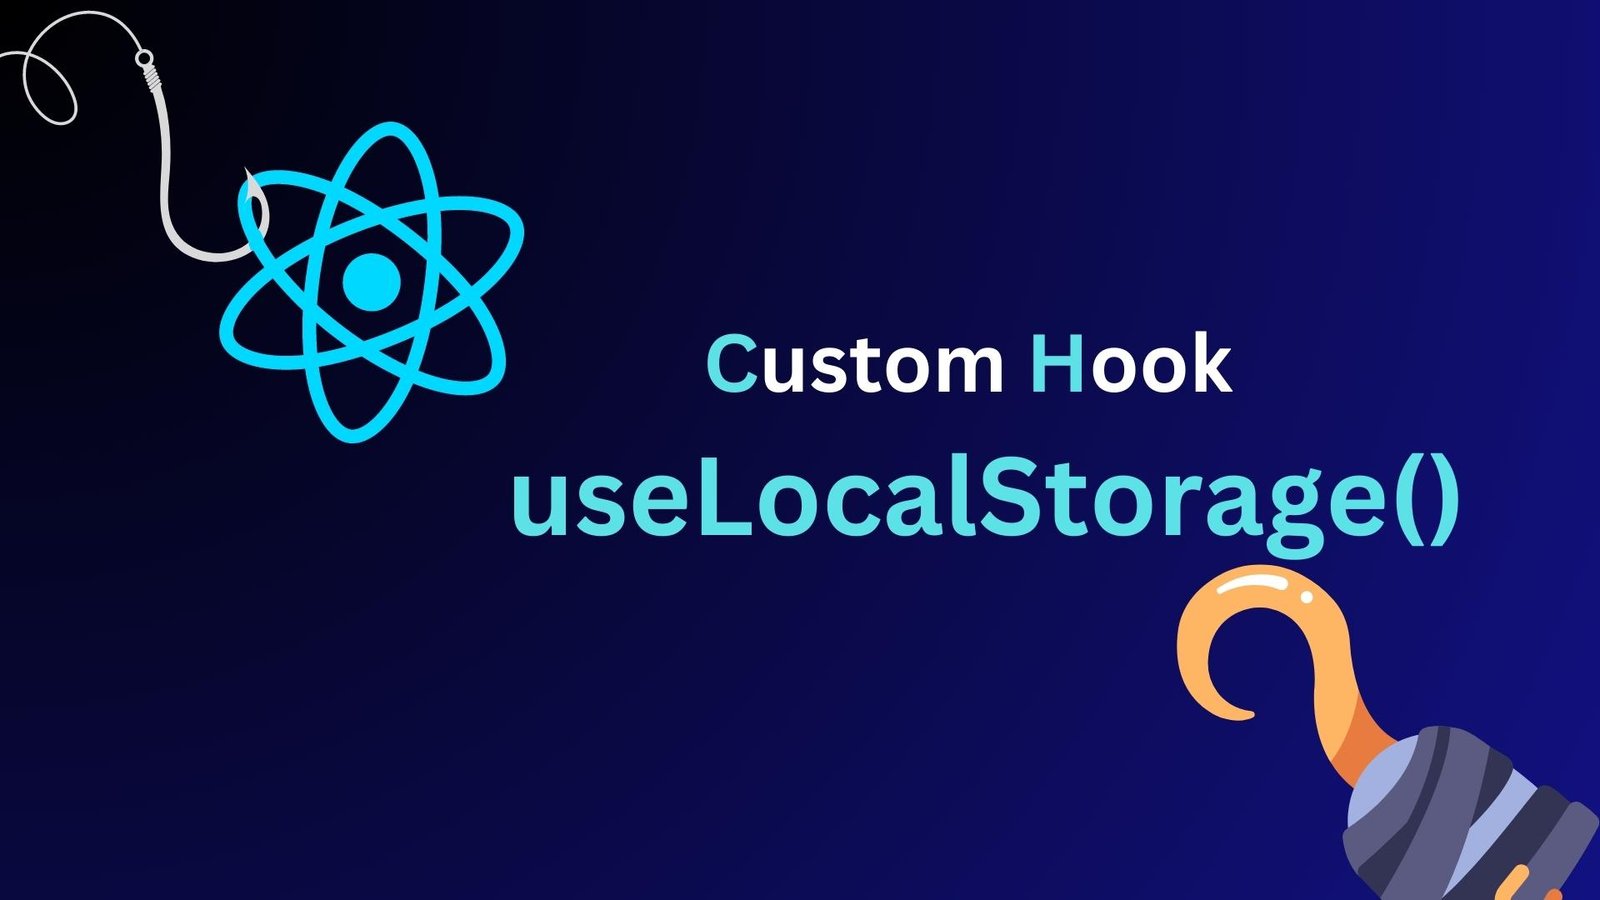 How to create useLocalStorage Custom Hook in ReactJS